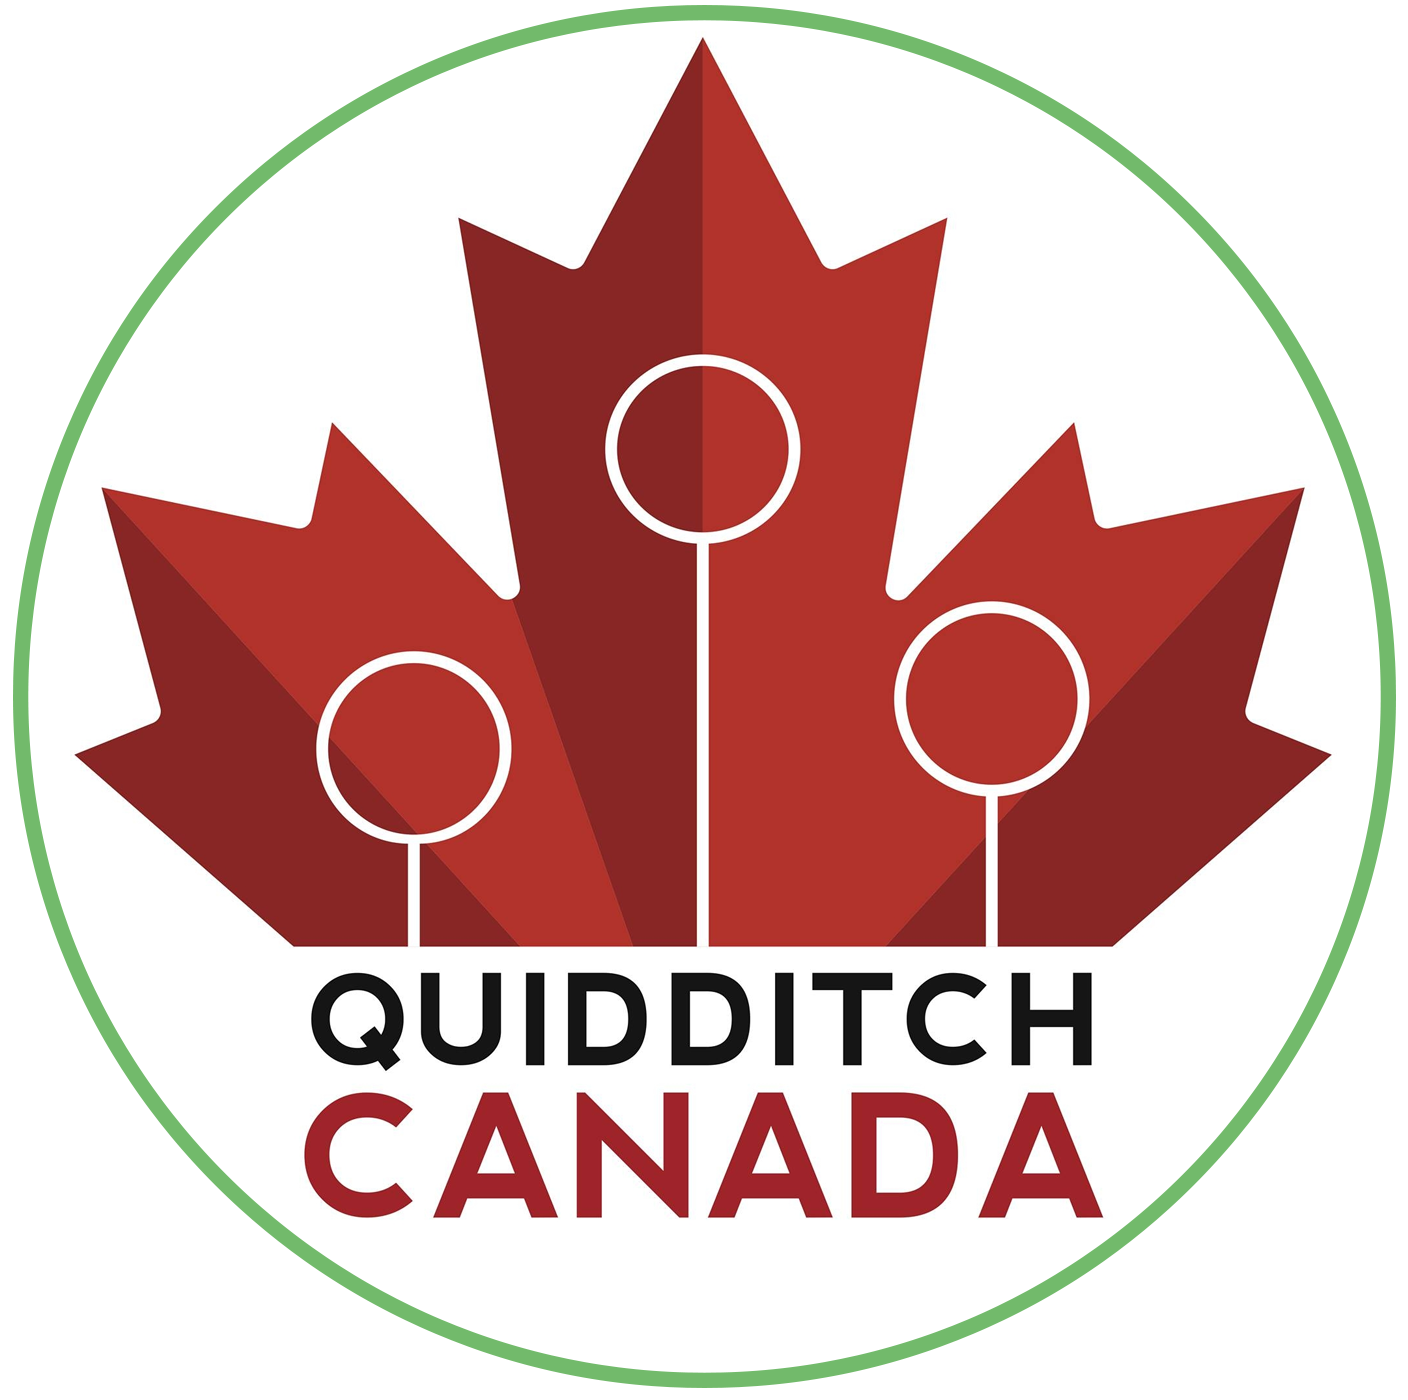 Quidditch Canada logo